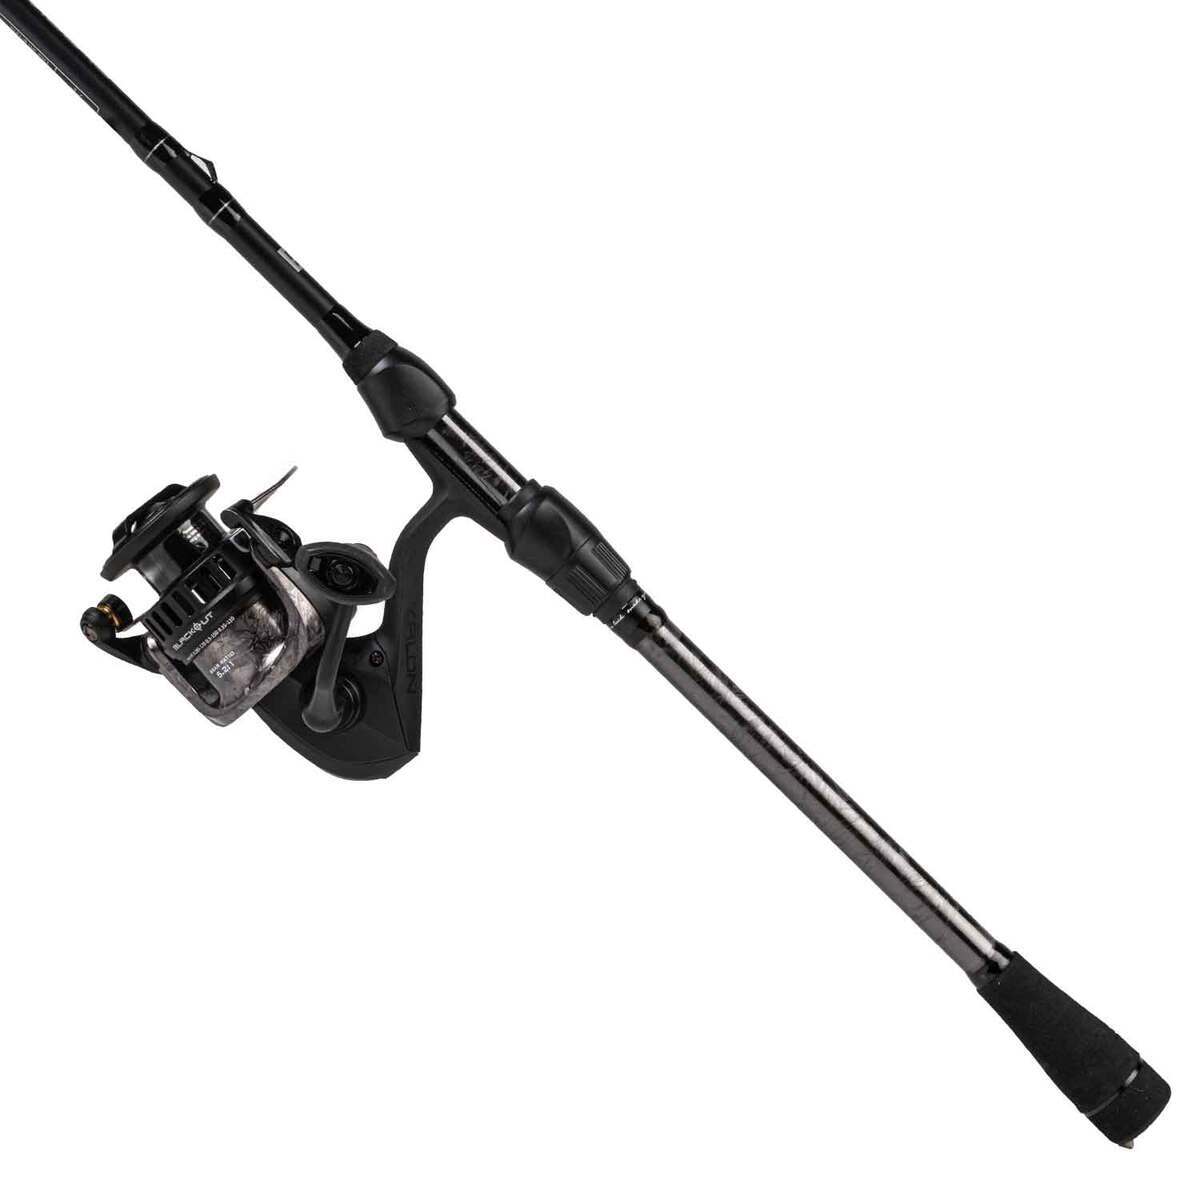 13 Fishing Blackout Casting Rod